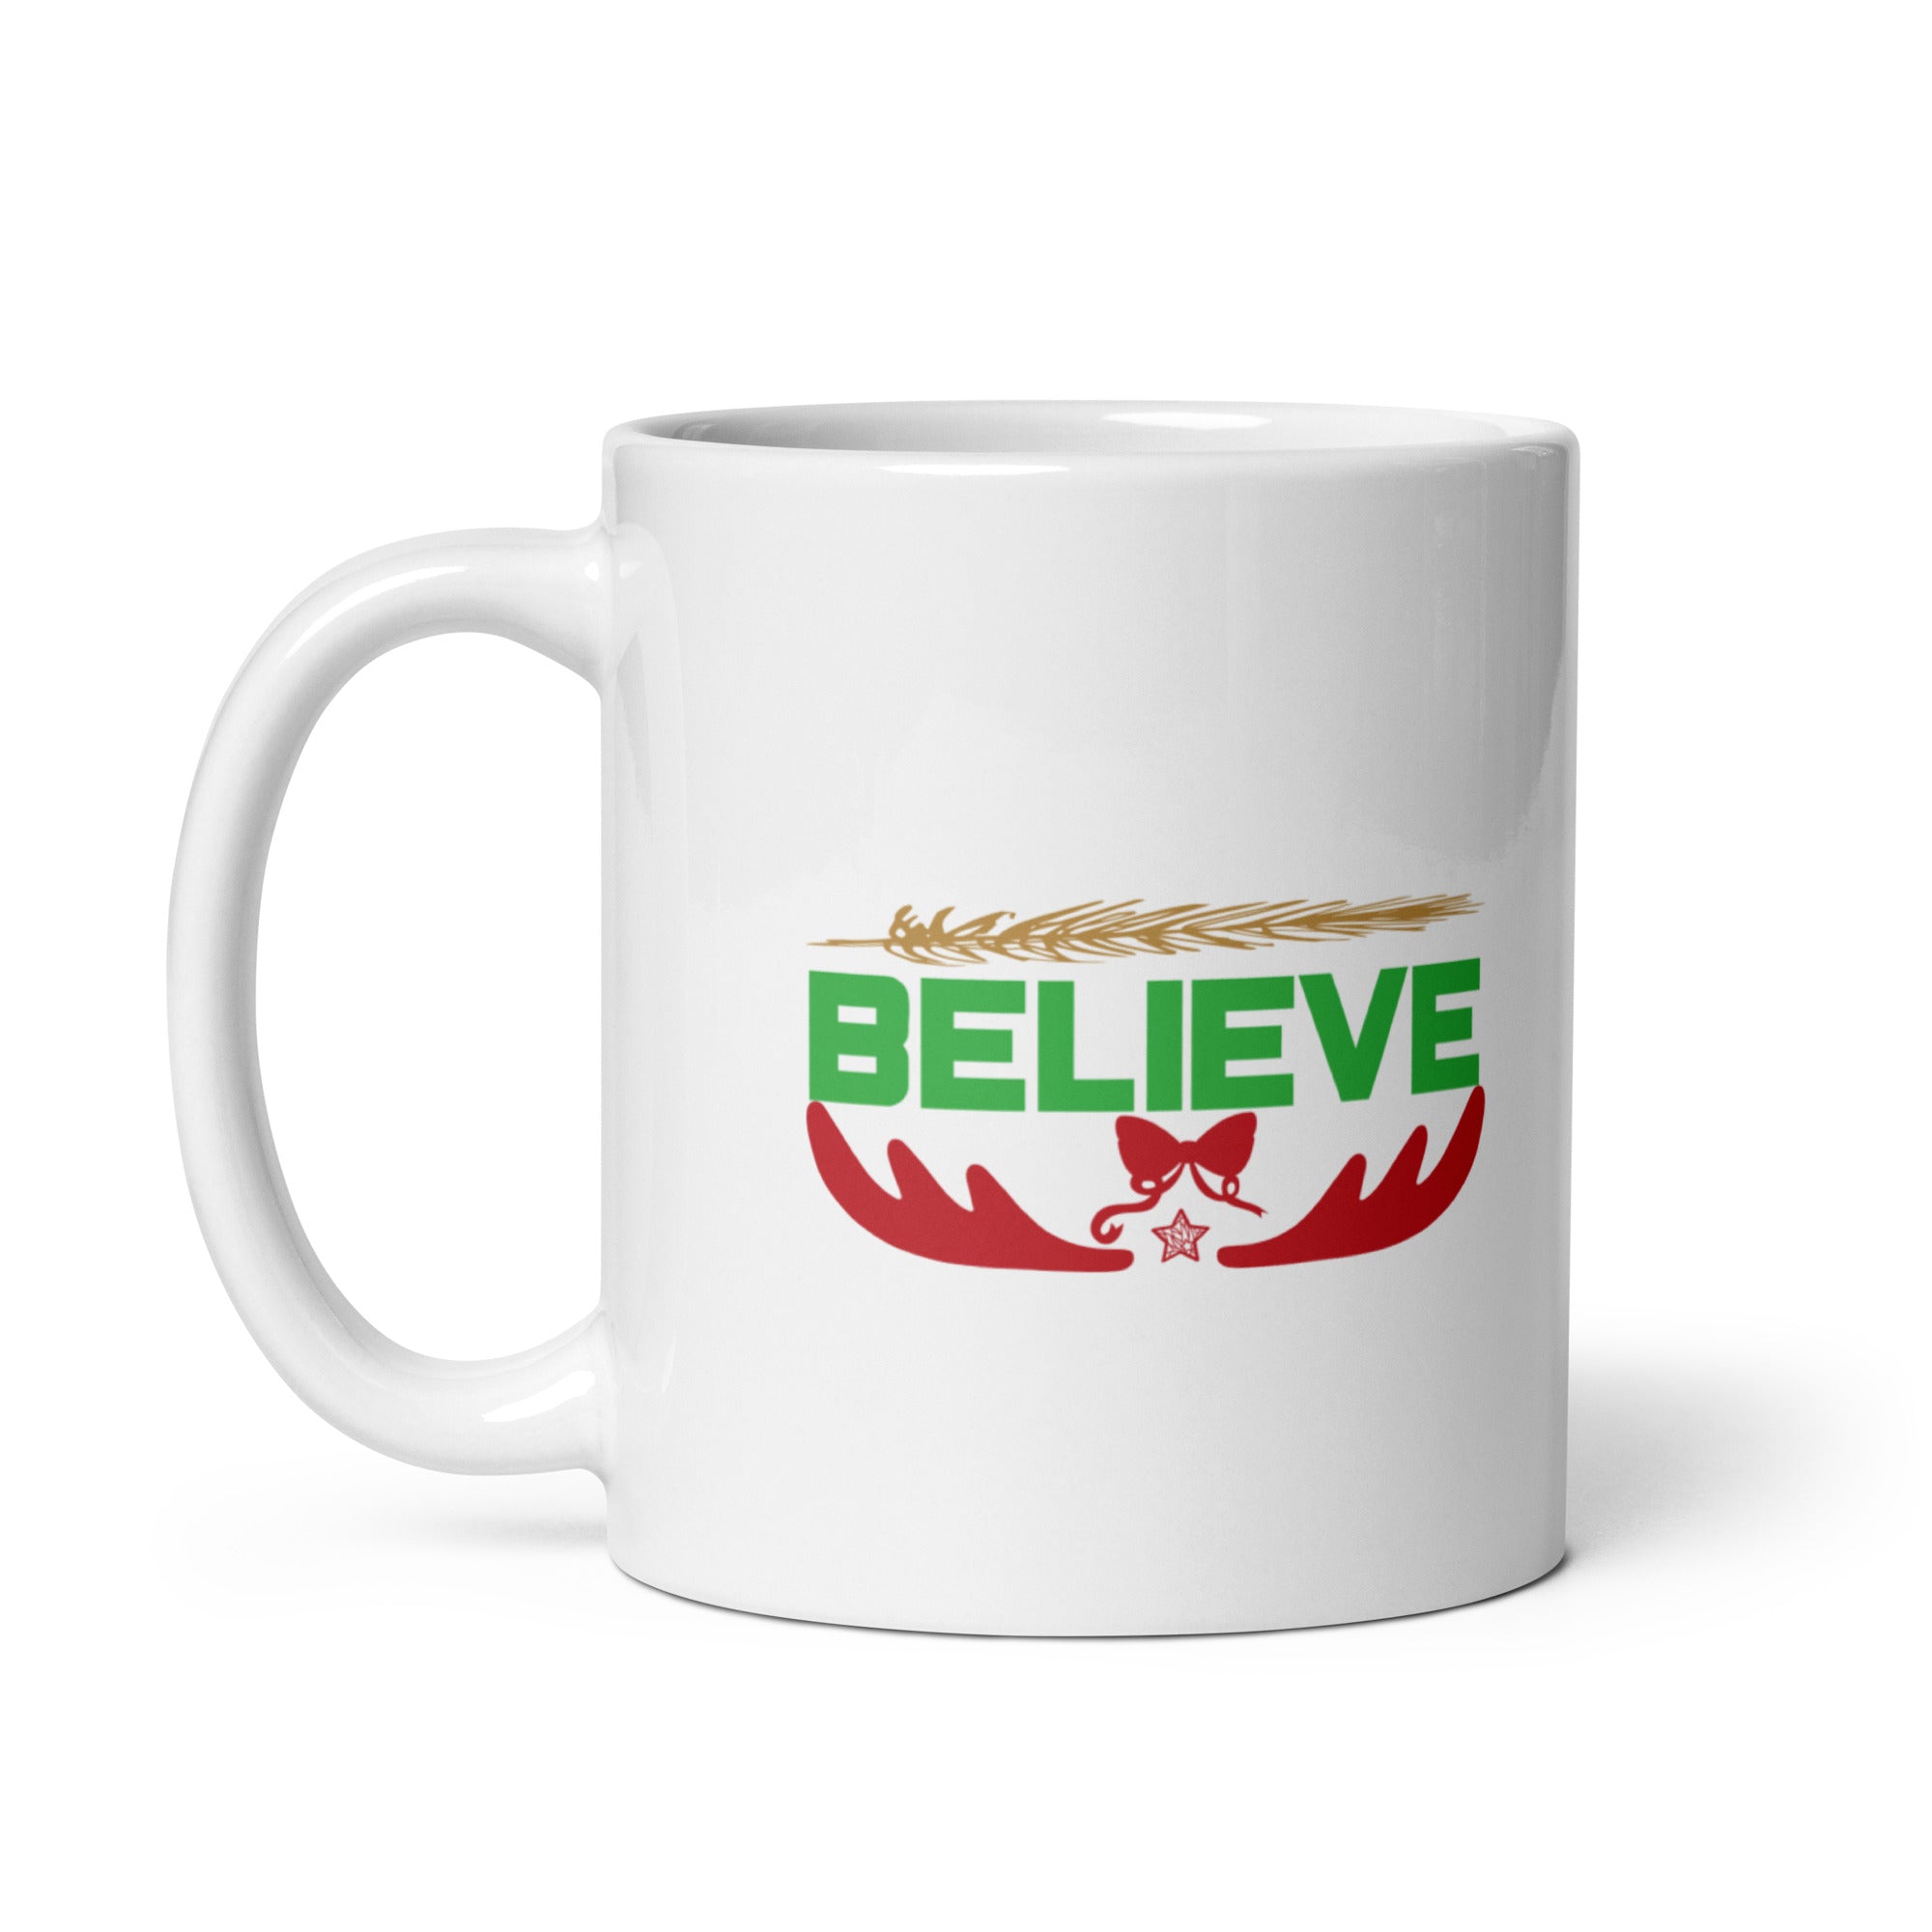 Believe - White glossy mug